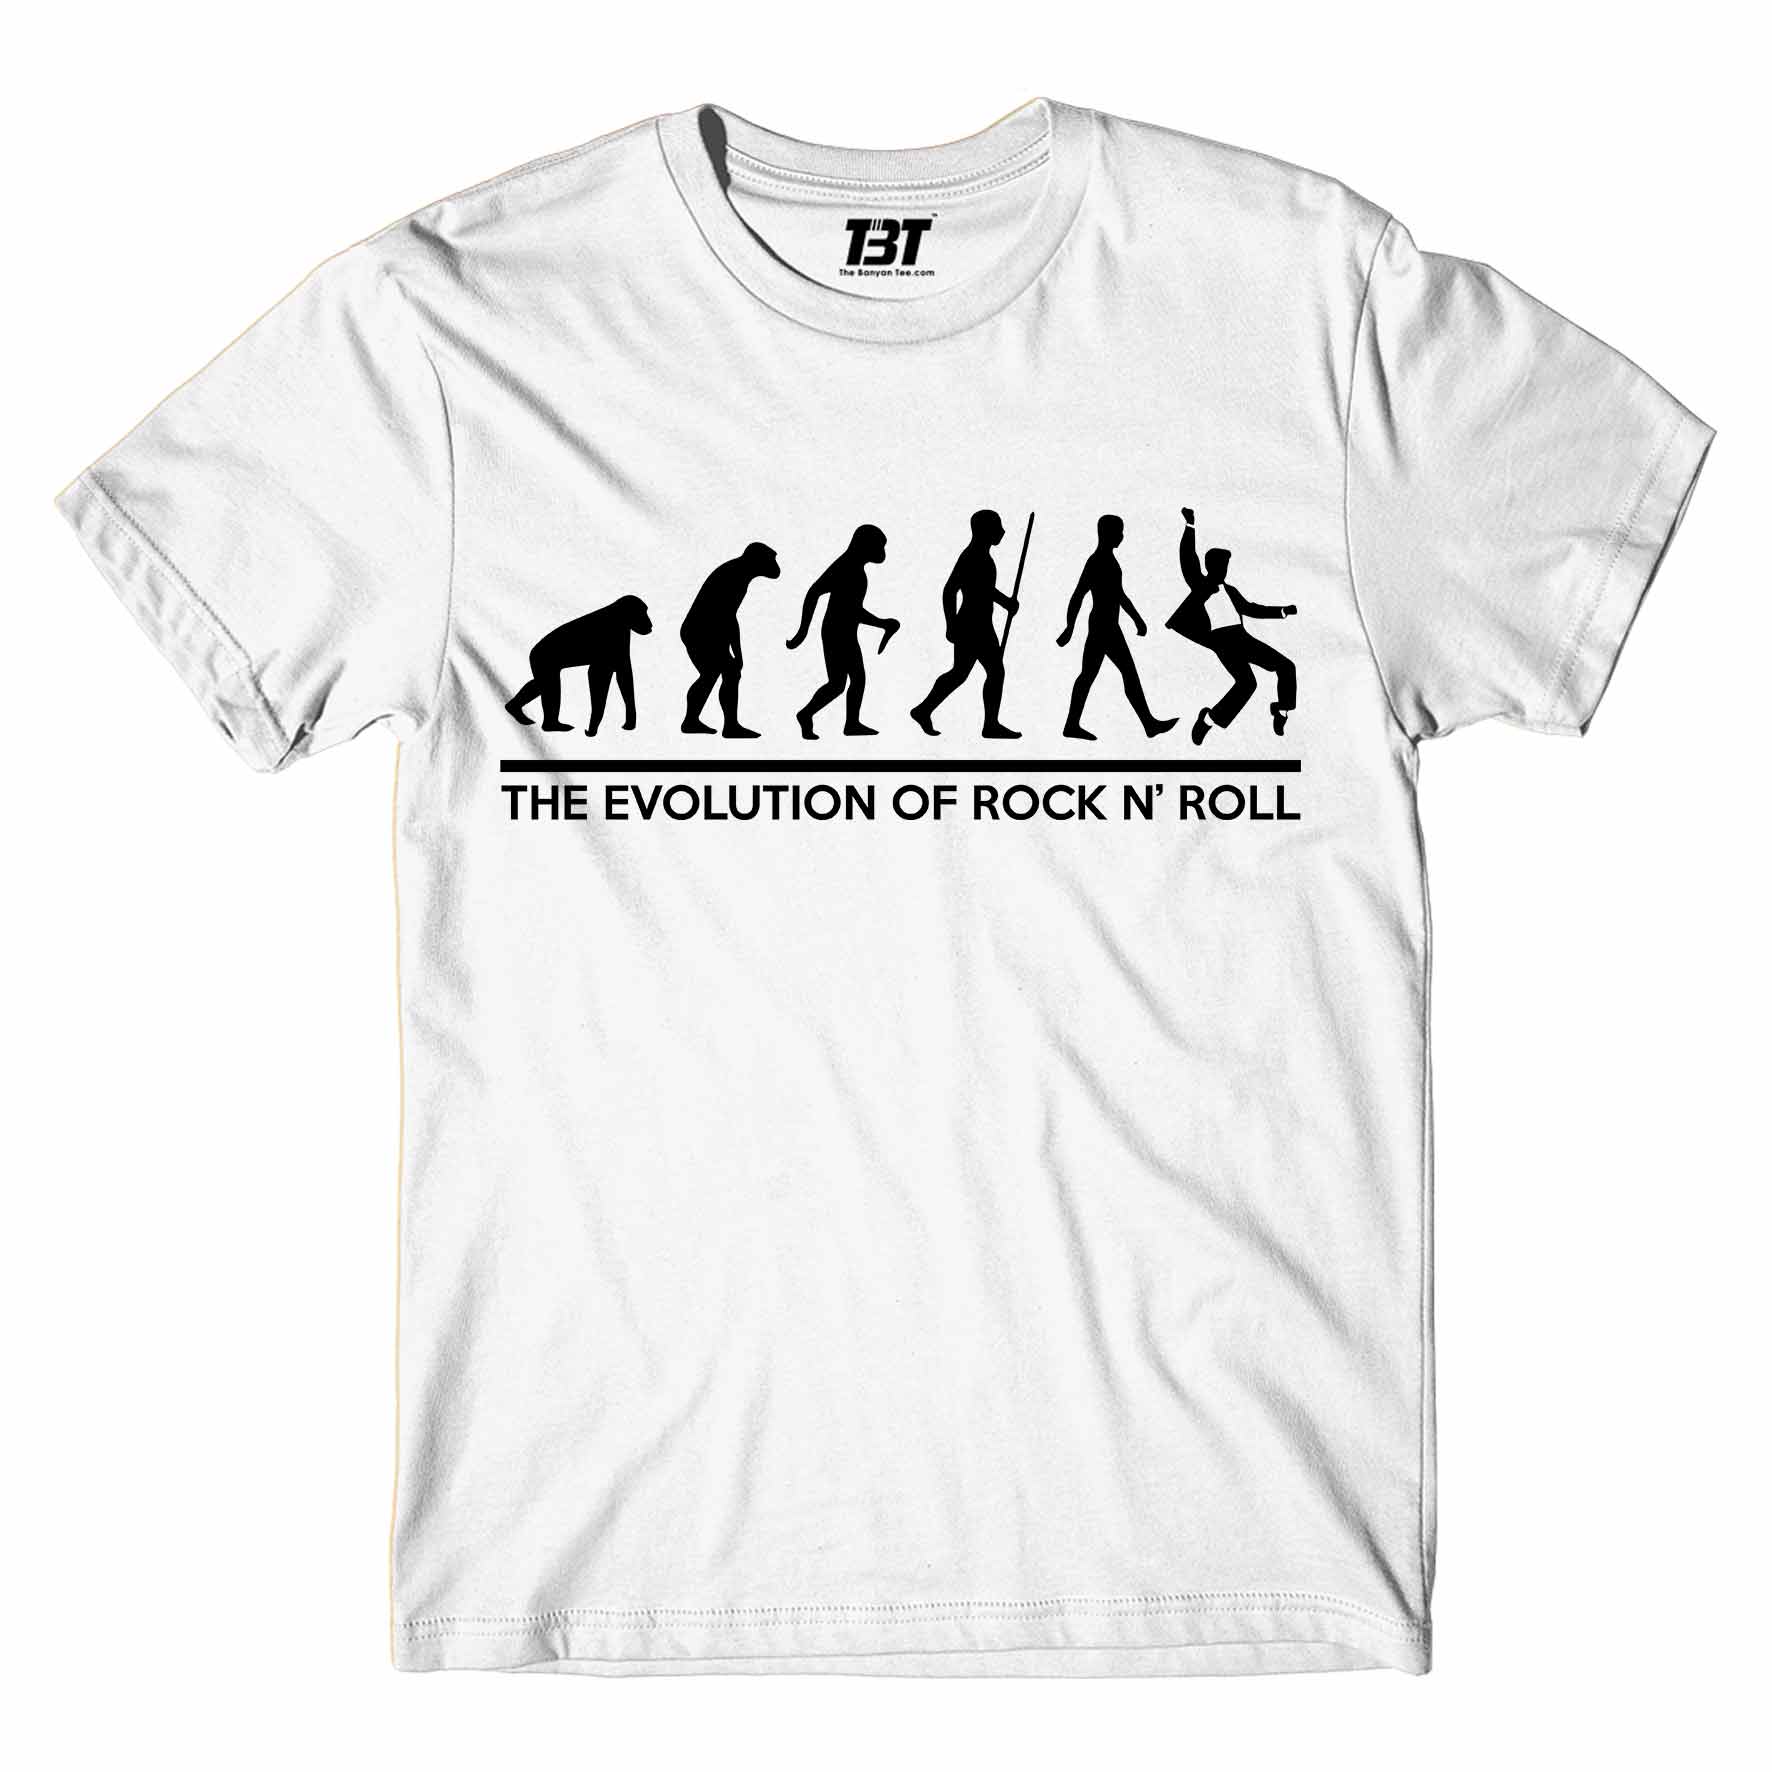 elvis presley rock 'n roll evolution t-shirt music band buy online usa united states the banyan tee tbt men women girls boys unisex white